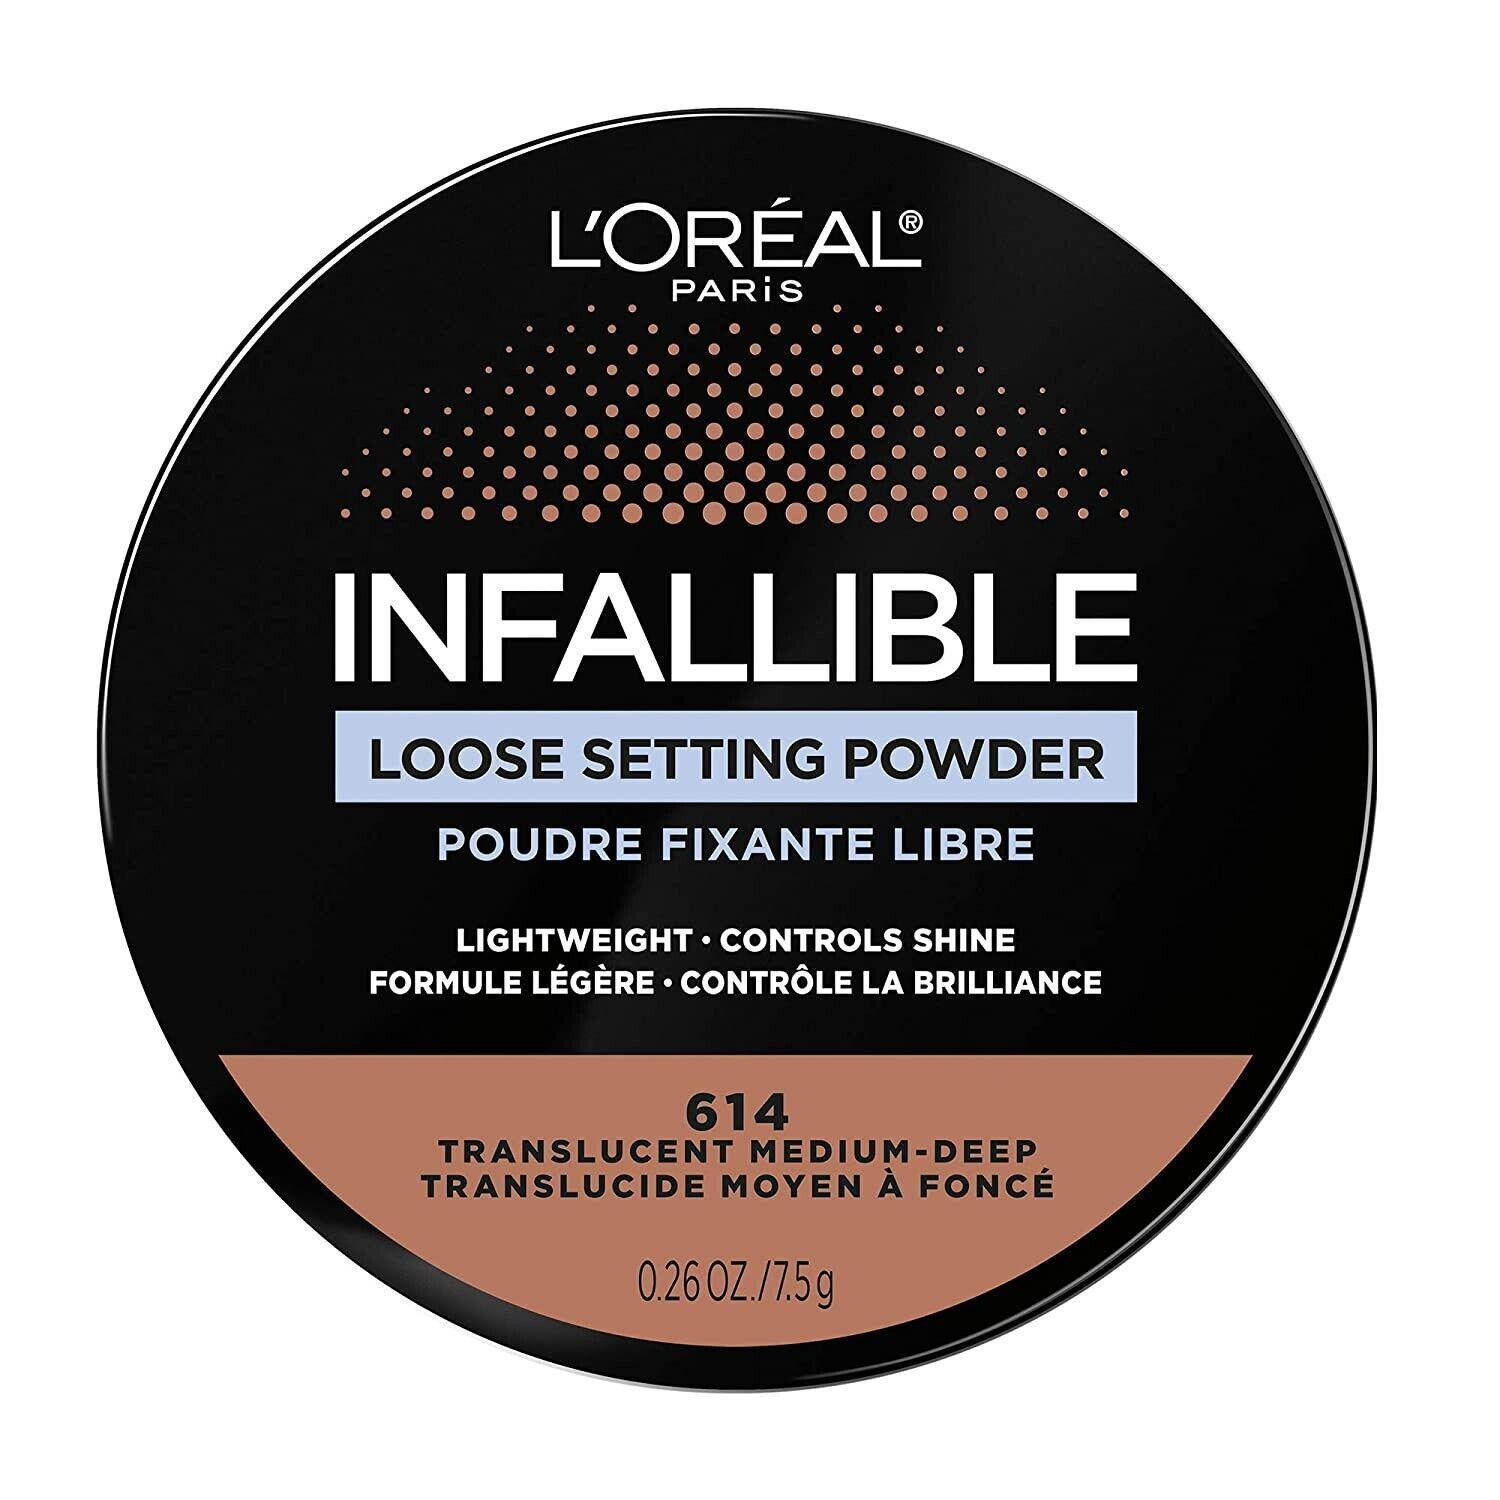 L'Oreal Paris Infallible Tinted Loose Setting Powder 614 Translucent Medium-Deep - $5.88